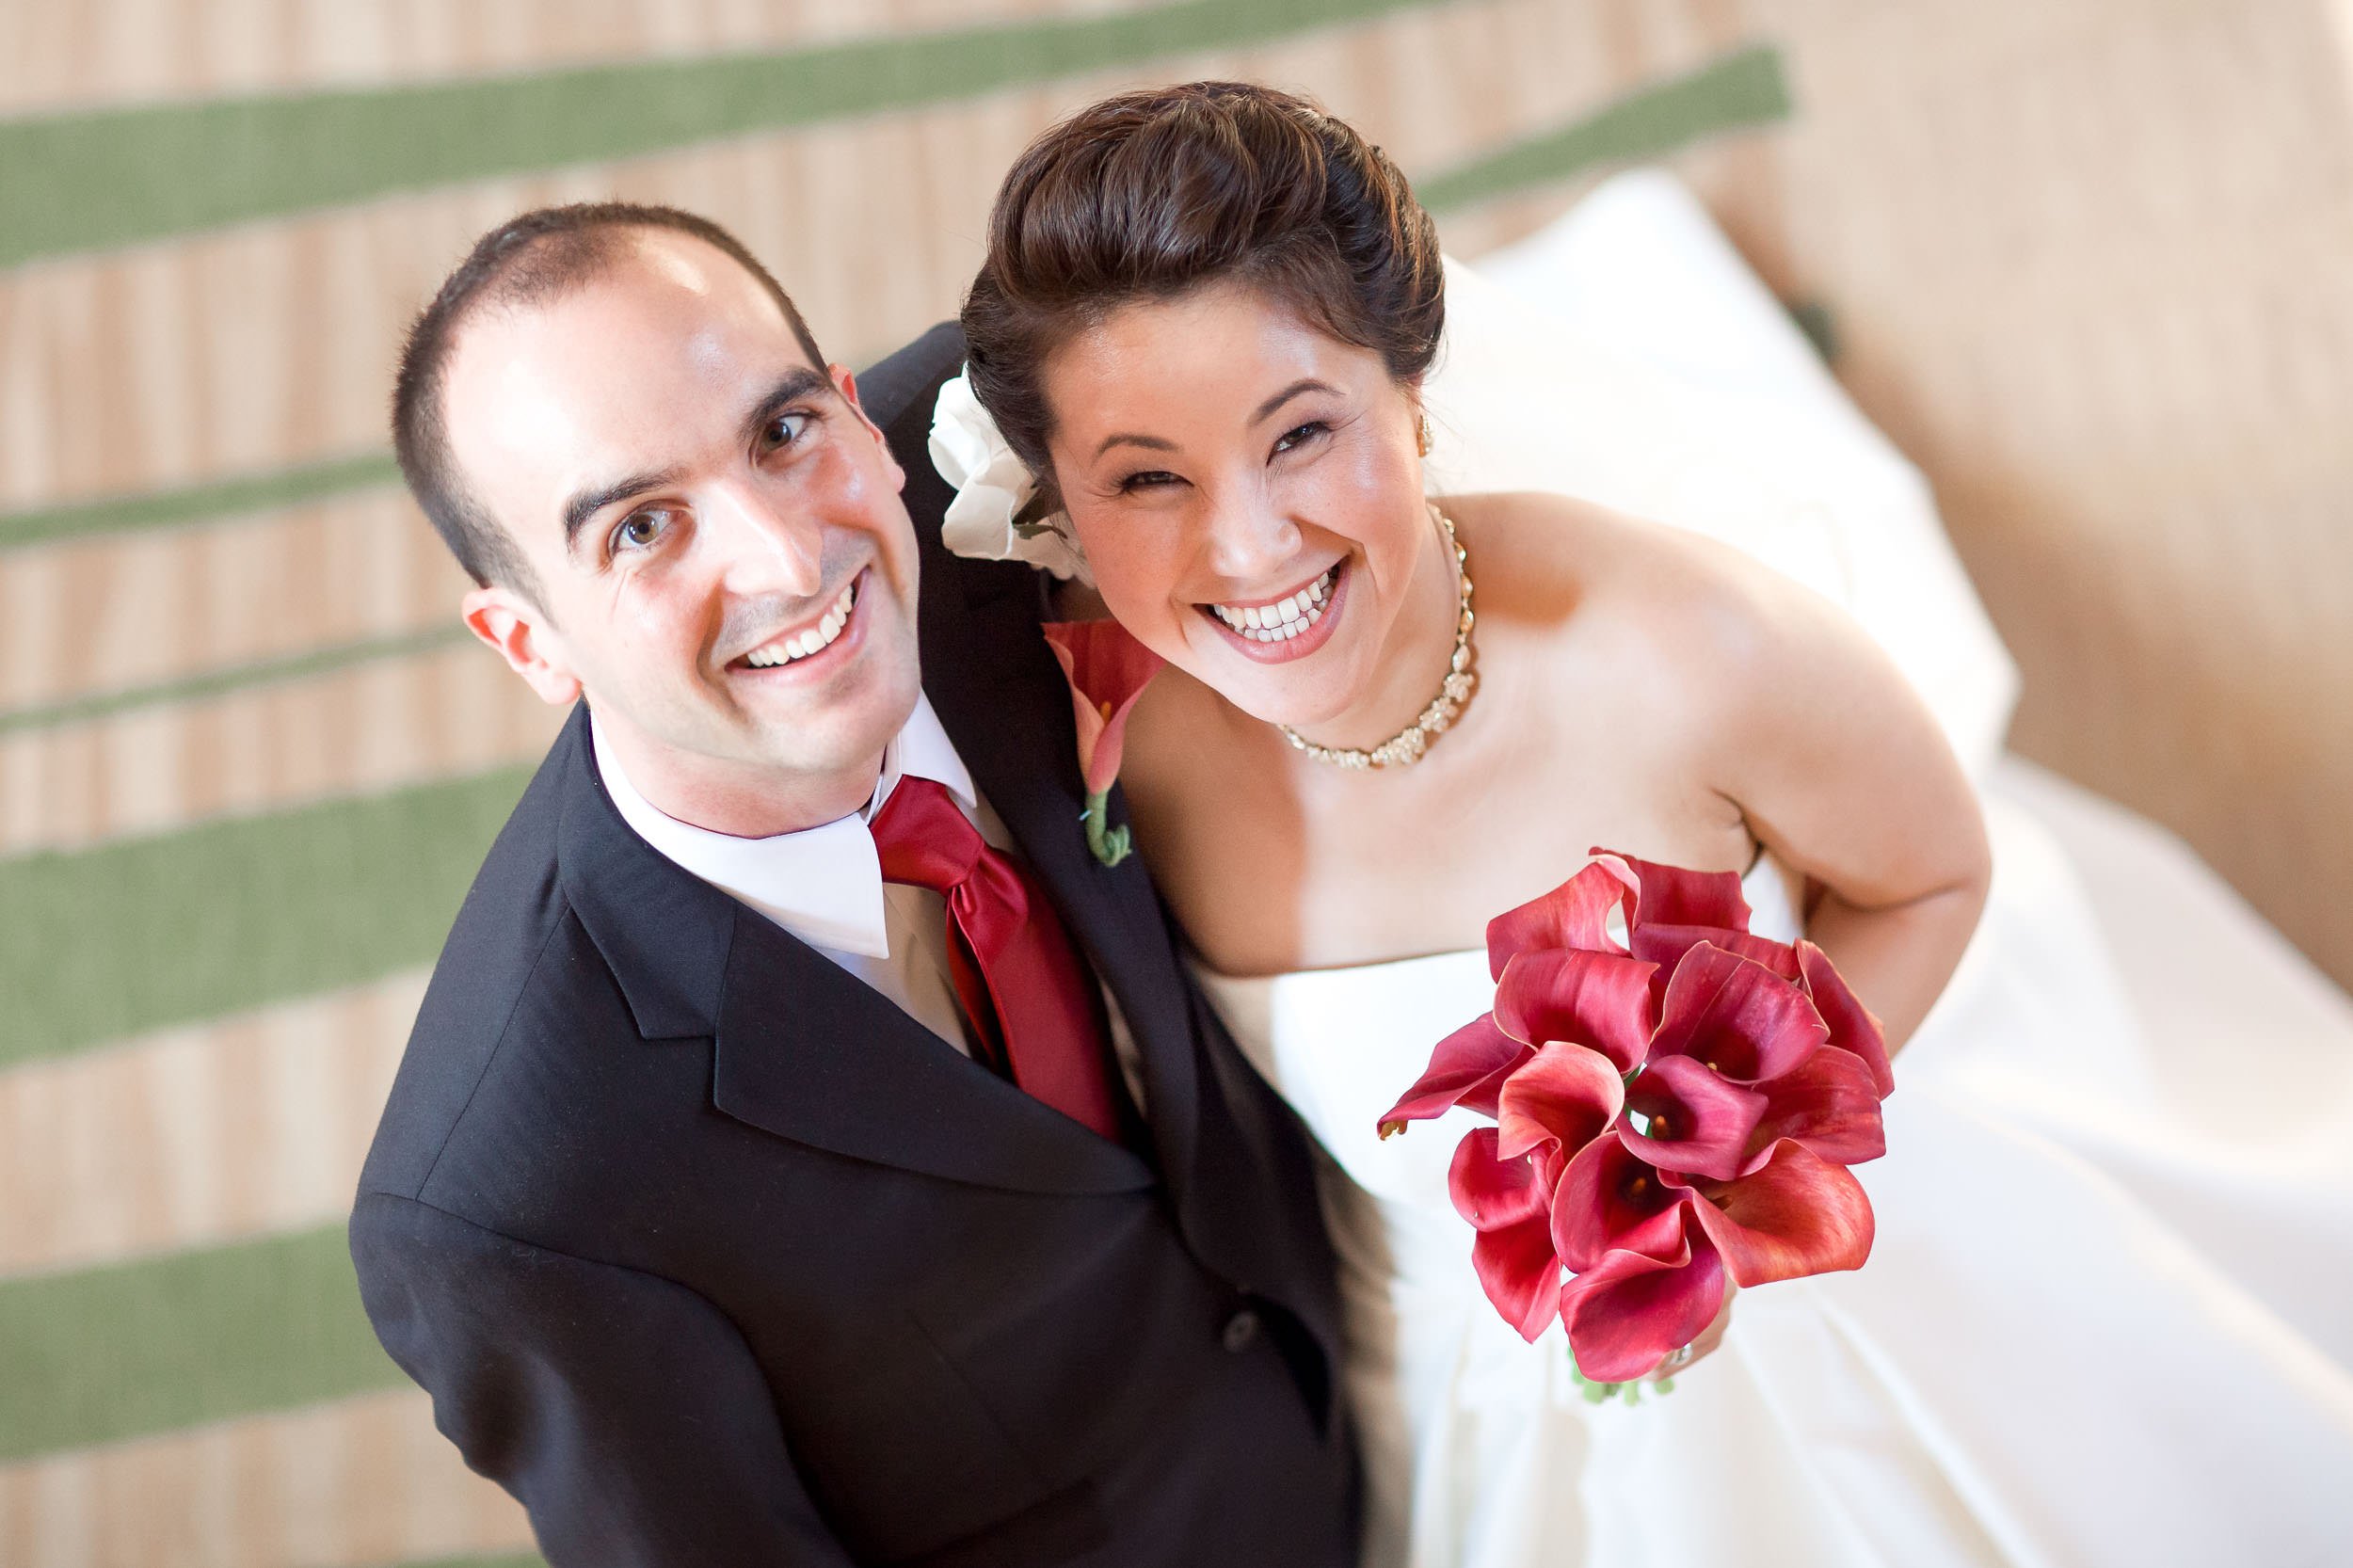 www.jdavidbuerk.com - Weddings - 044 - Nick and Yasuko (195 of 470) (_MG_7575-Edit).jpg